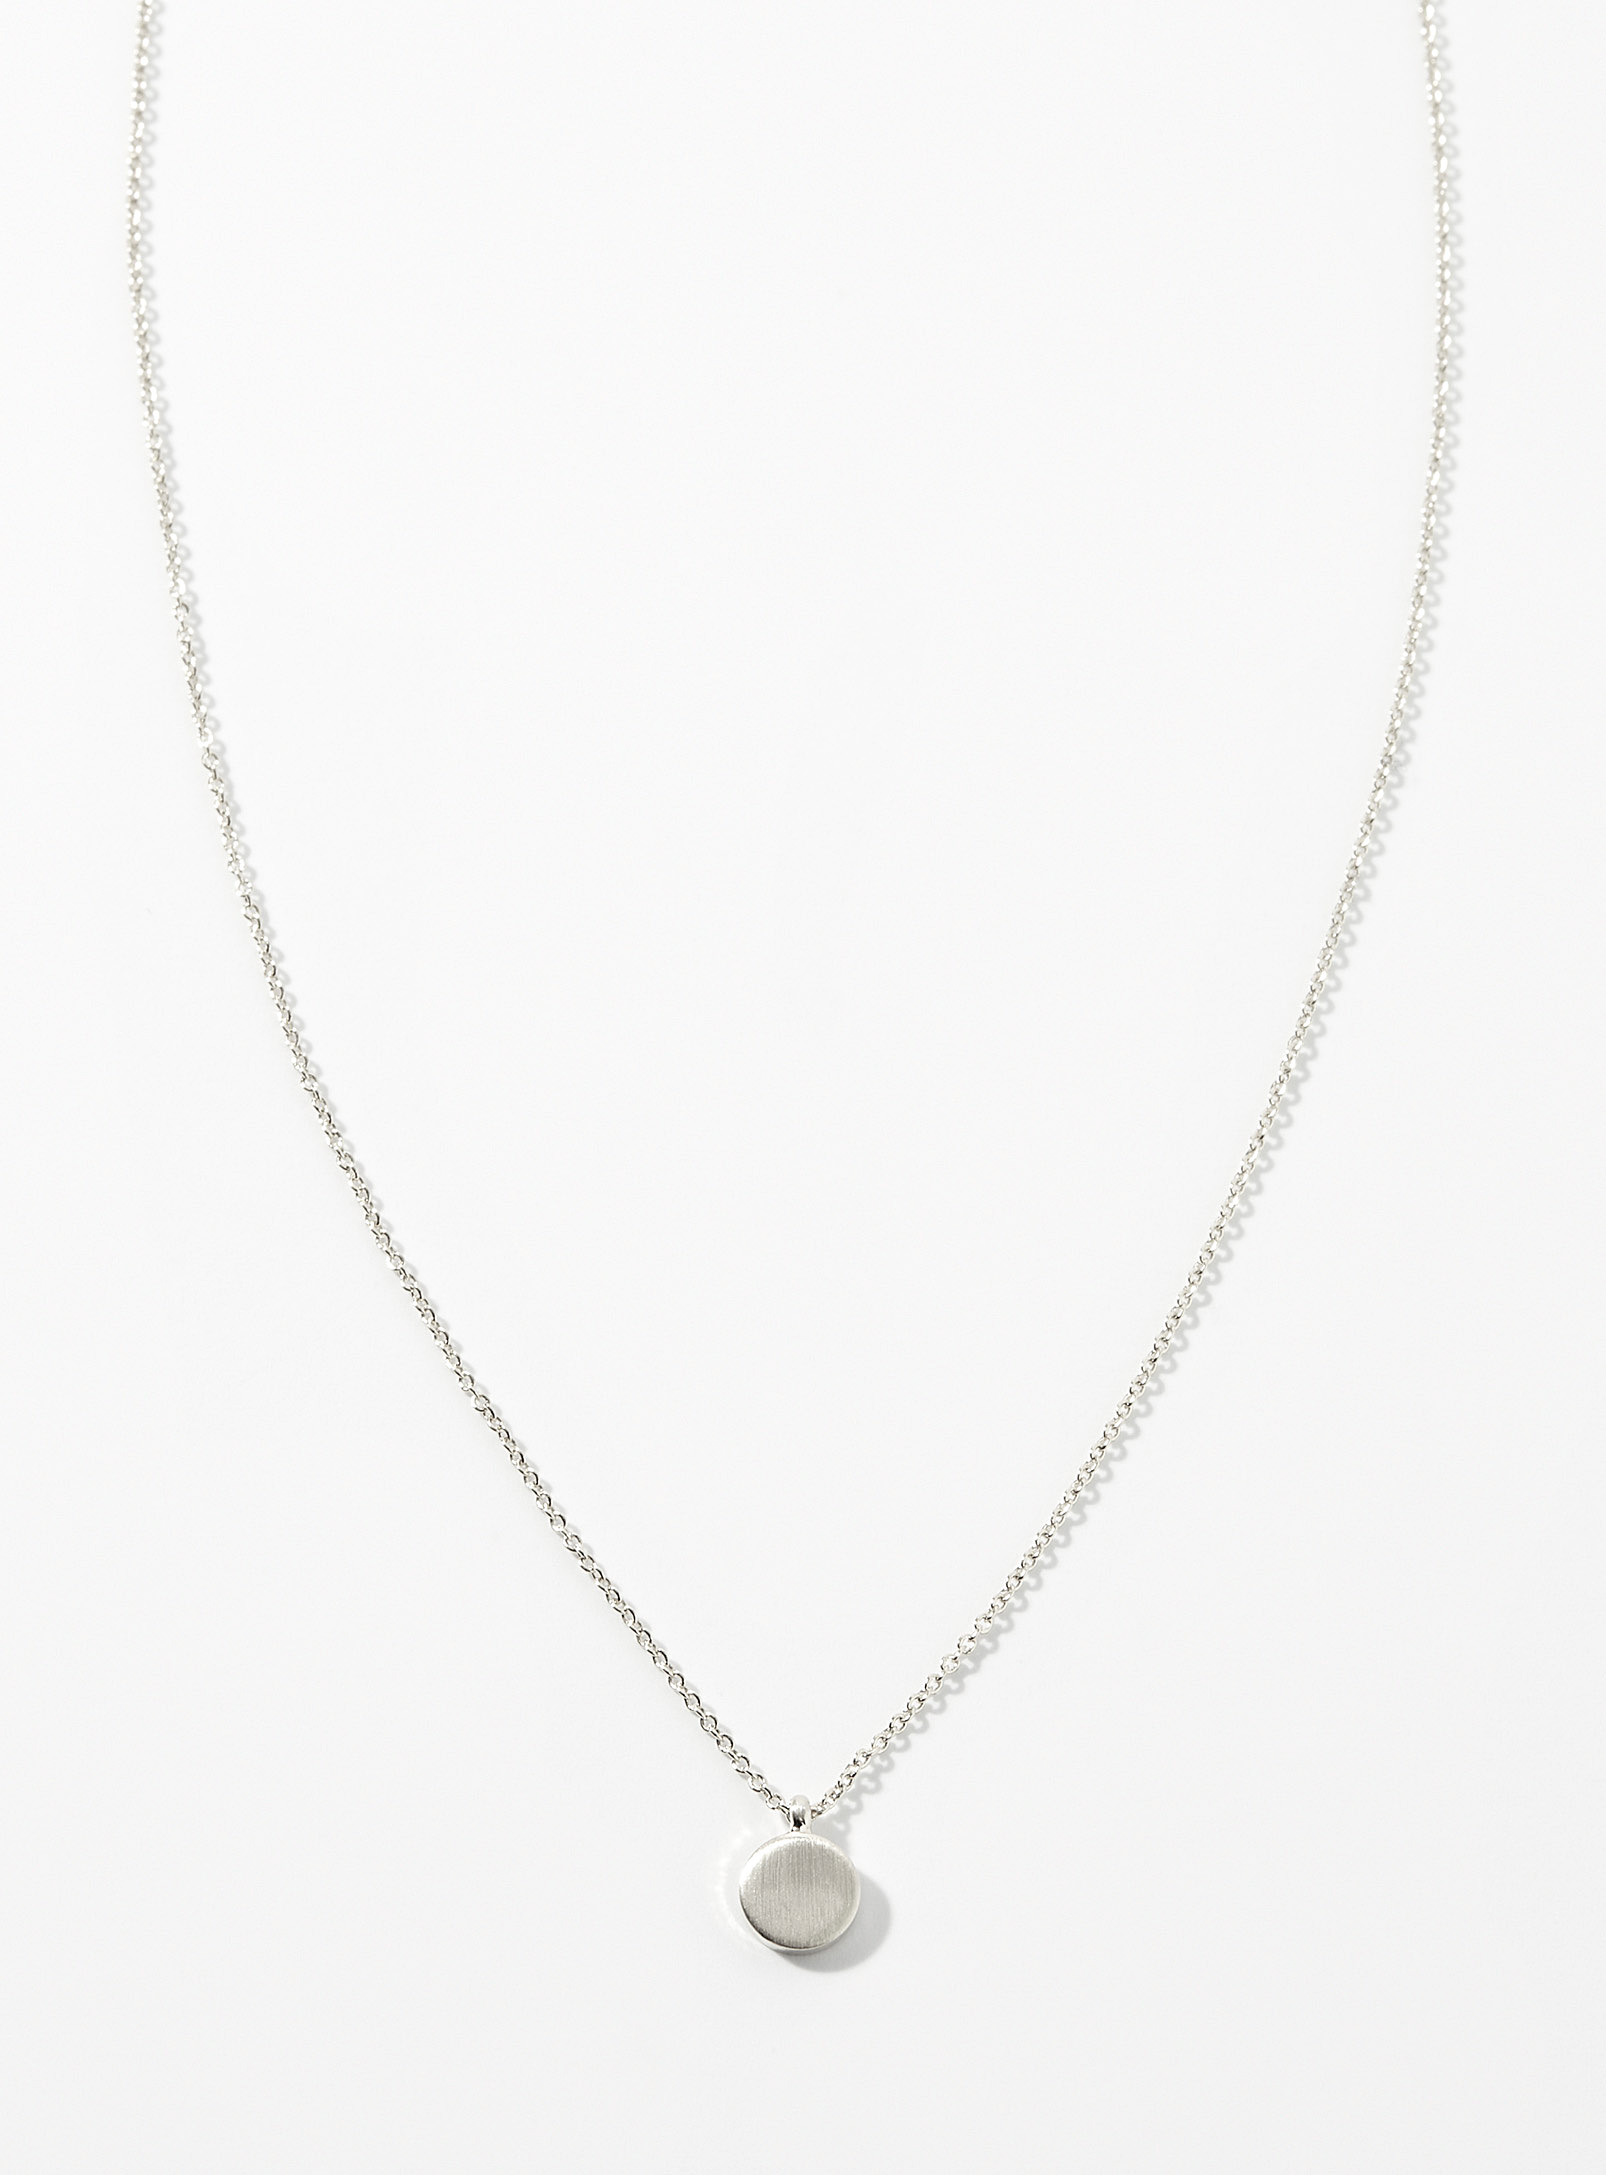 Simons - Women's Minimalist pendant necklace